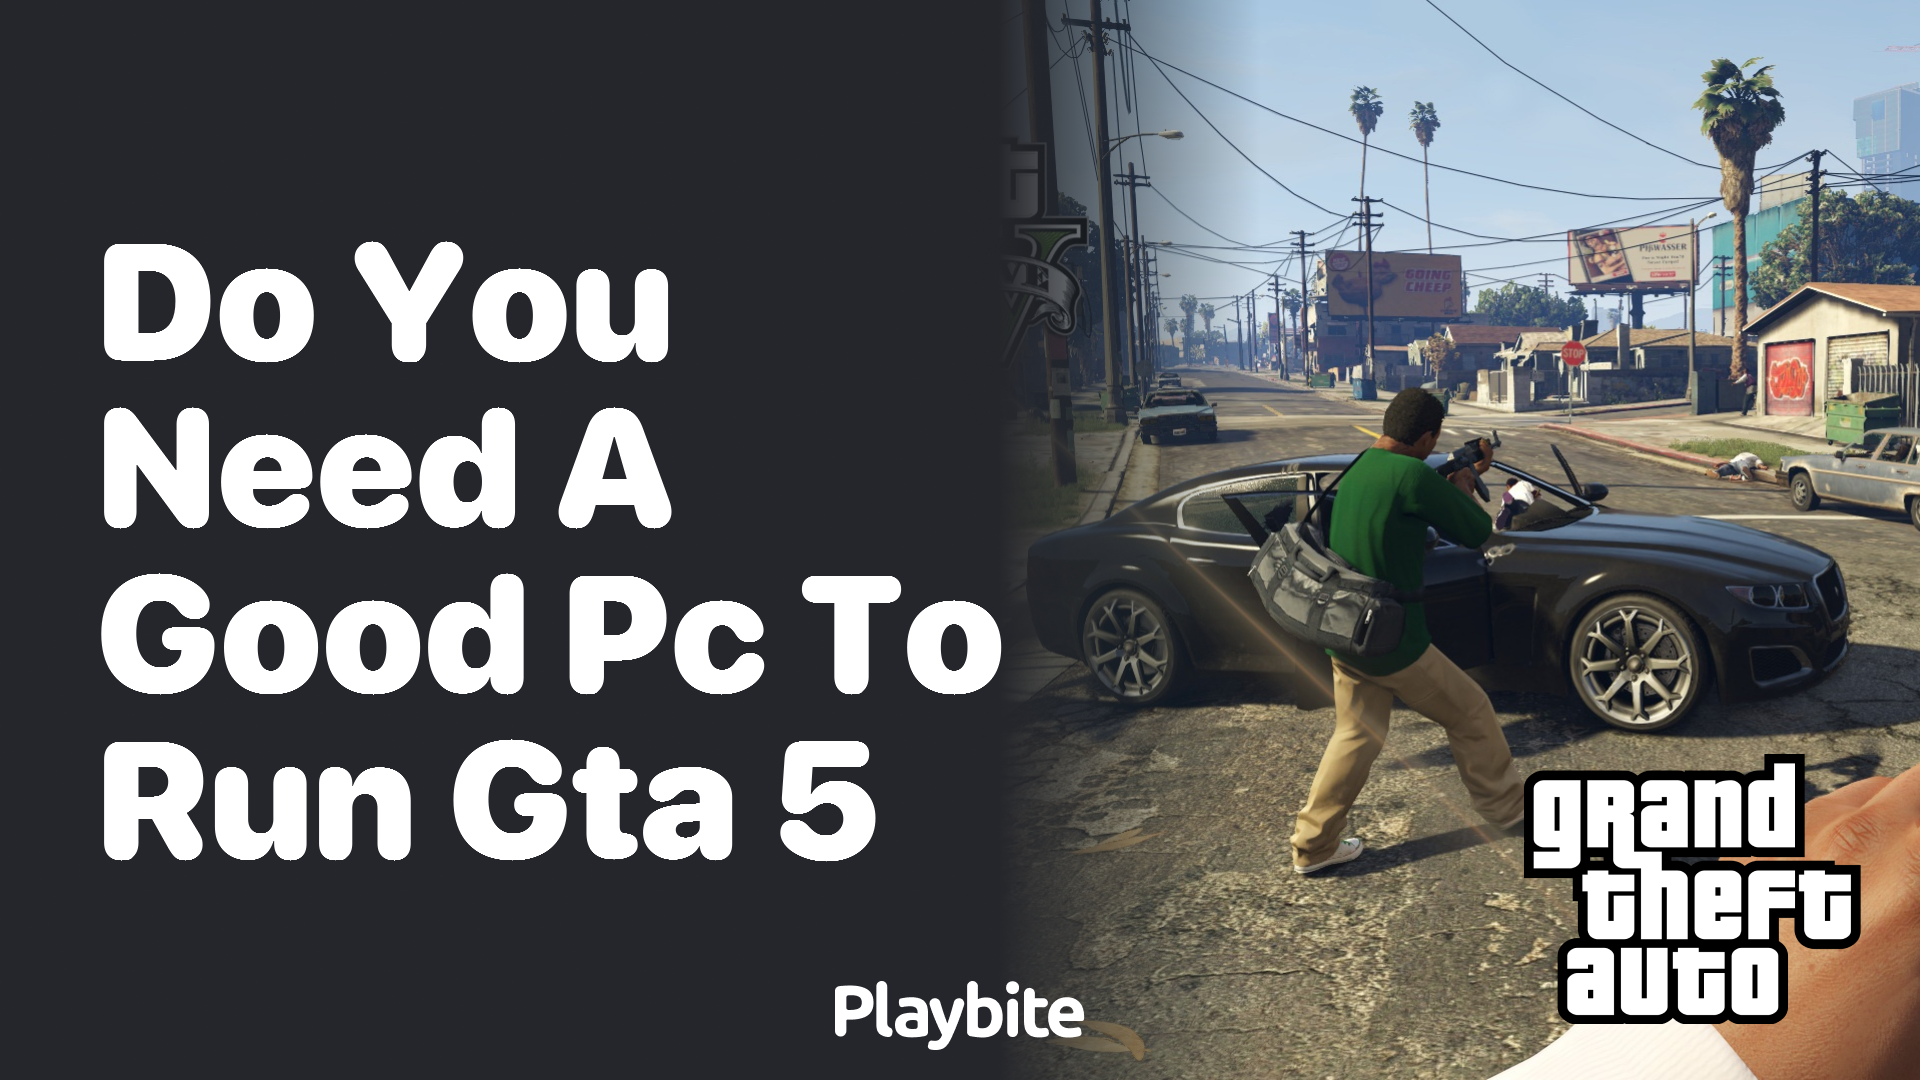 Do you need a good PC to run GTA 5?